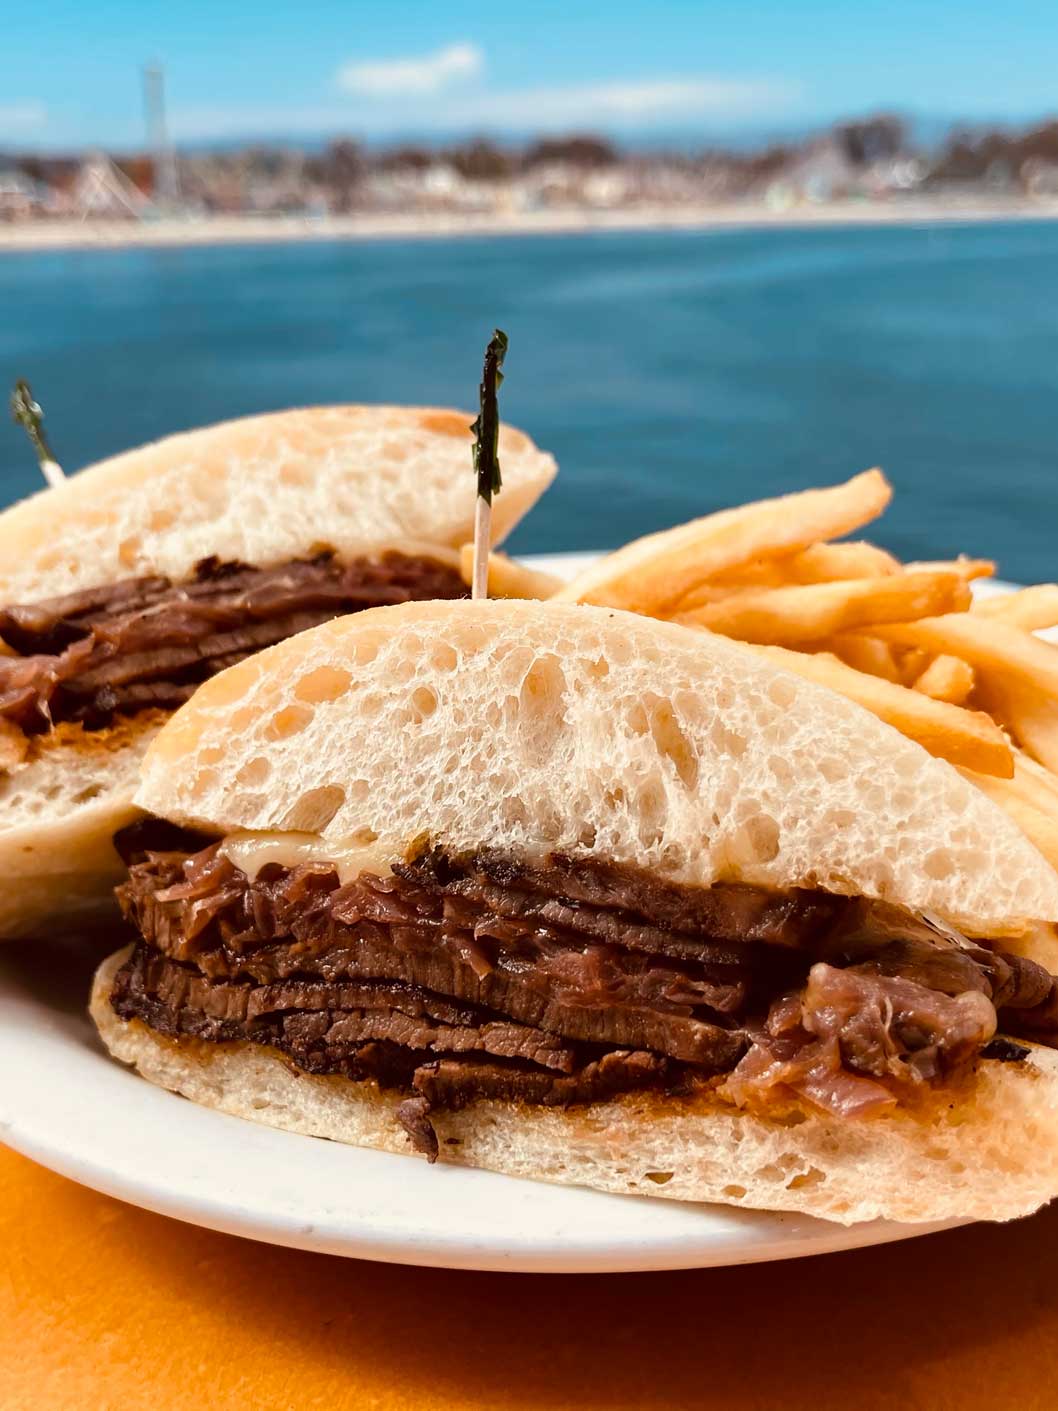 Woodies Café Lunch & Dinner Menu – Tri-Tip Steak Sandwich